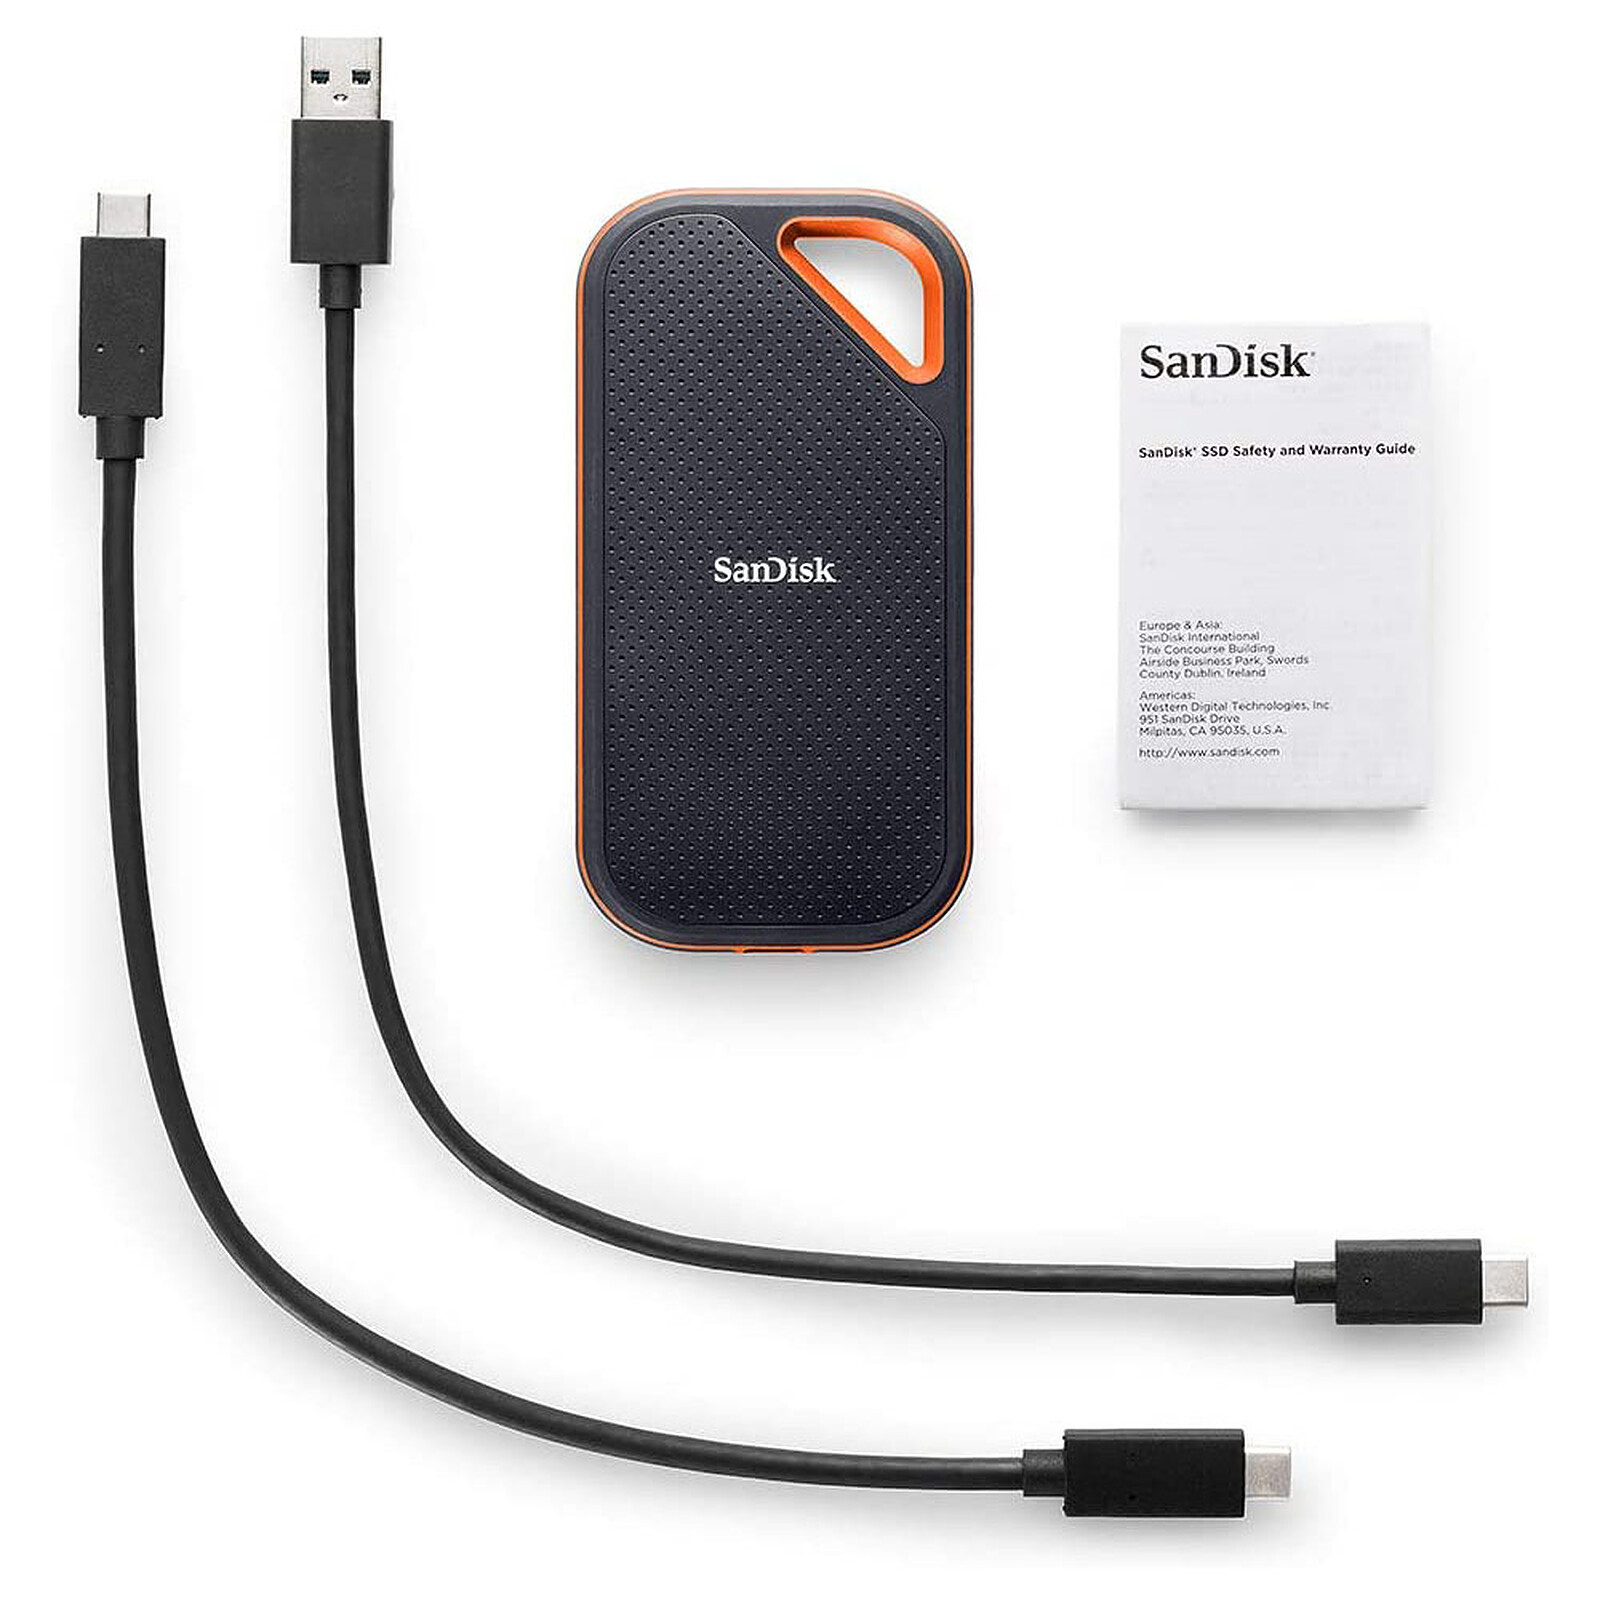 SanDisk Extreme PRO Portable SSD V2 2 To